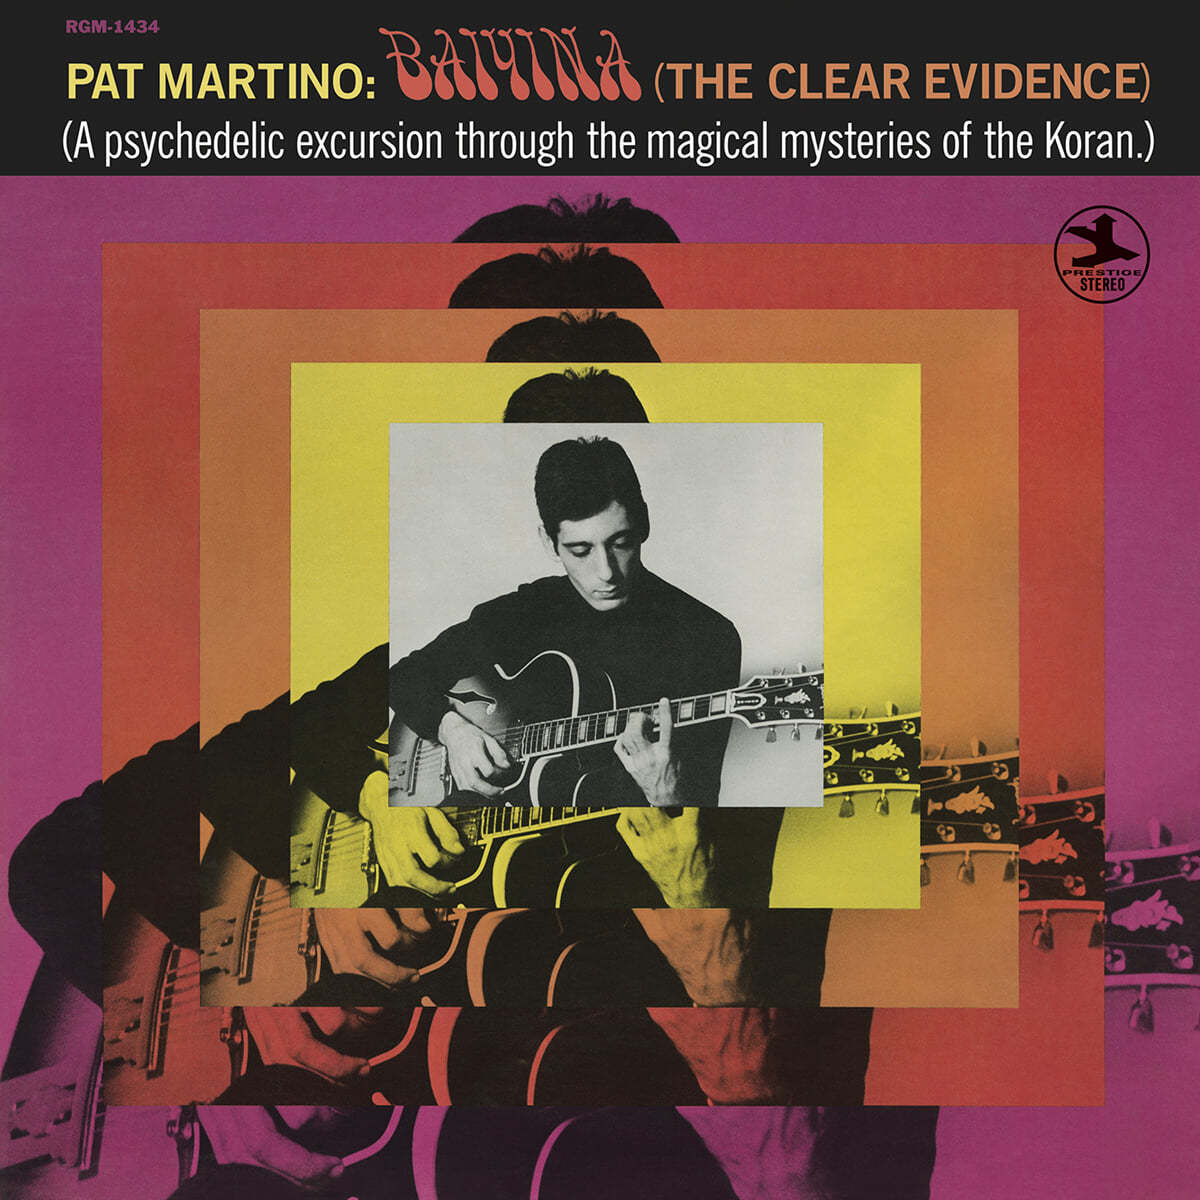 Pat Martino (팻 마티노) -  Baiyina (The Clear Evidence) [오렌지 컬러 LP]